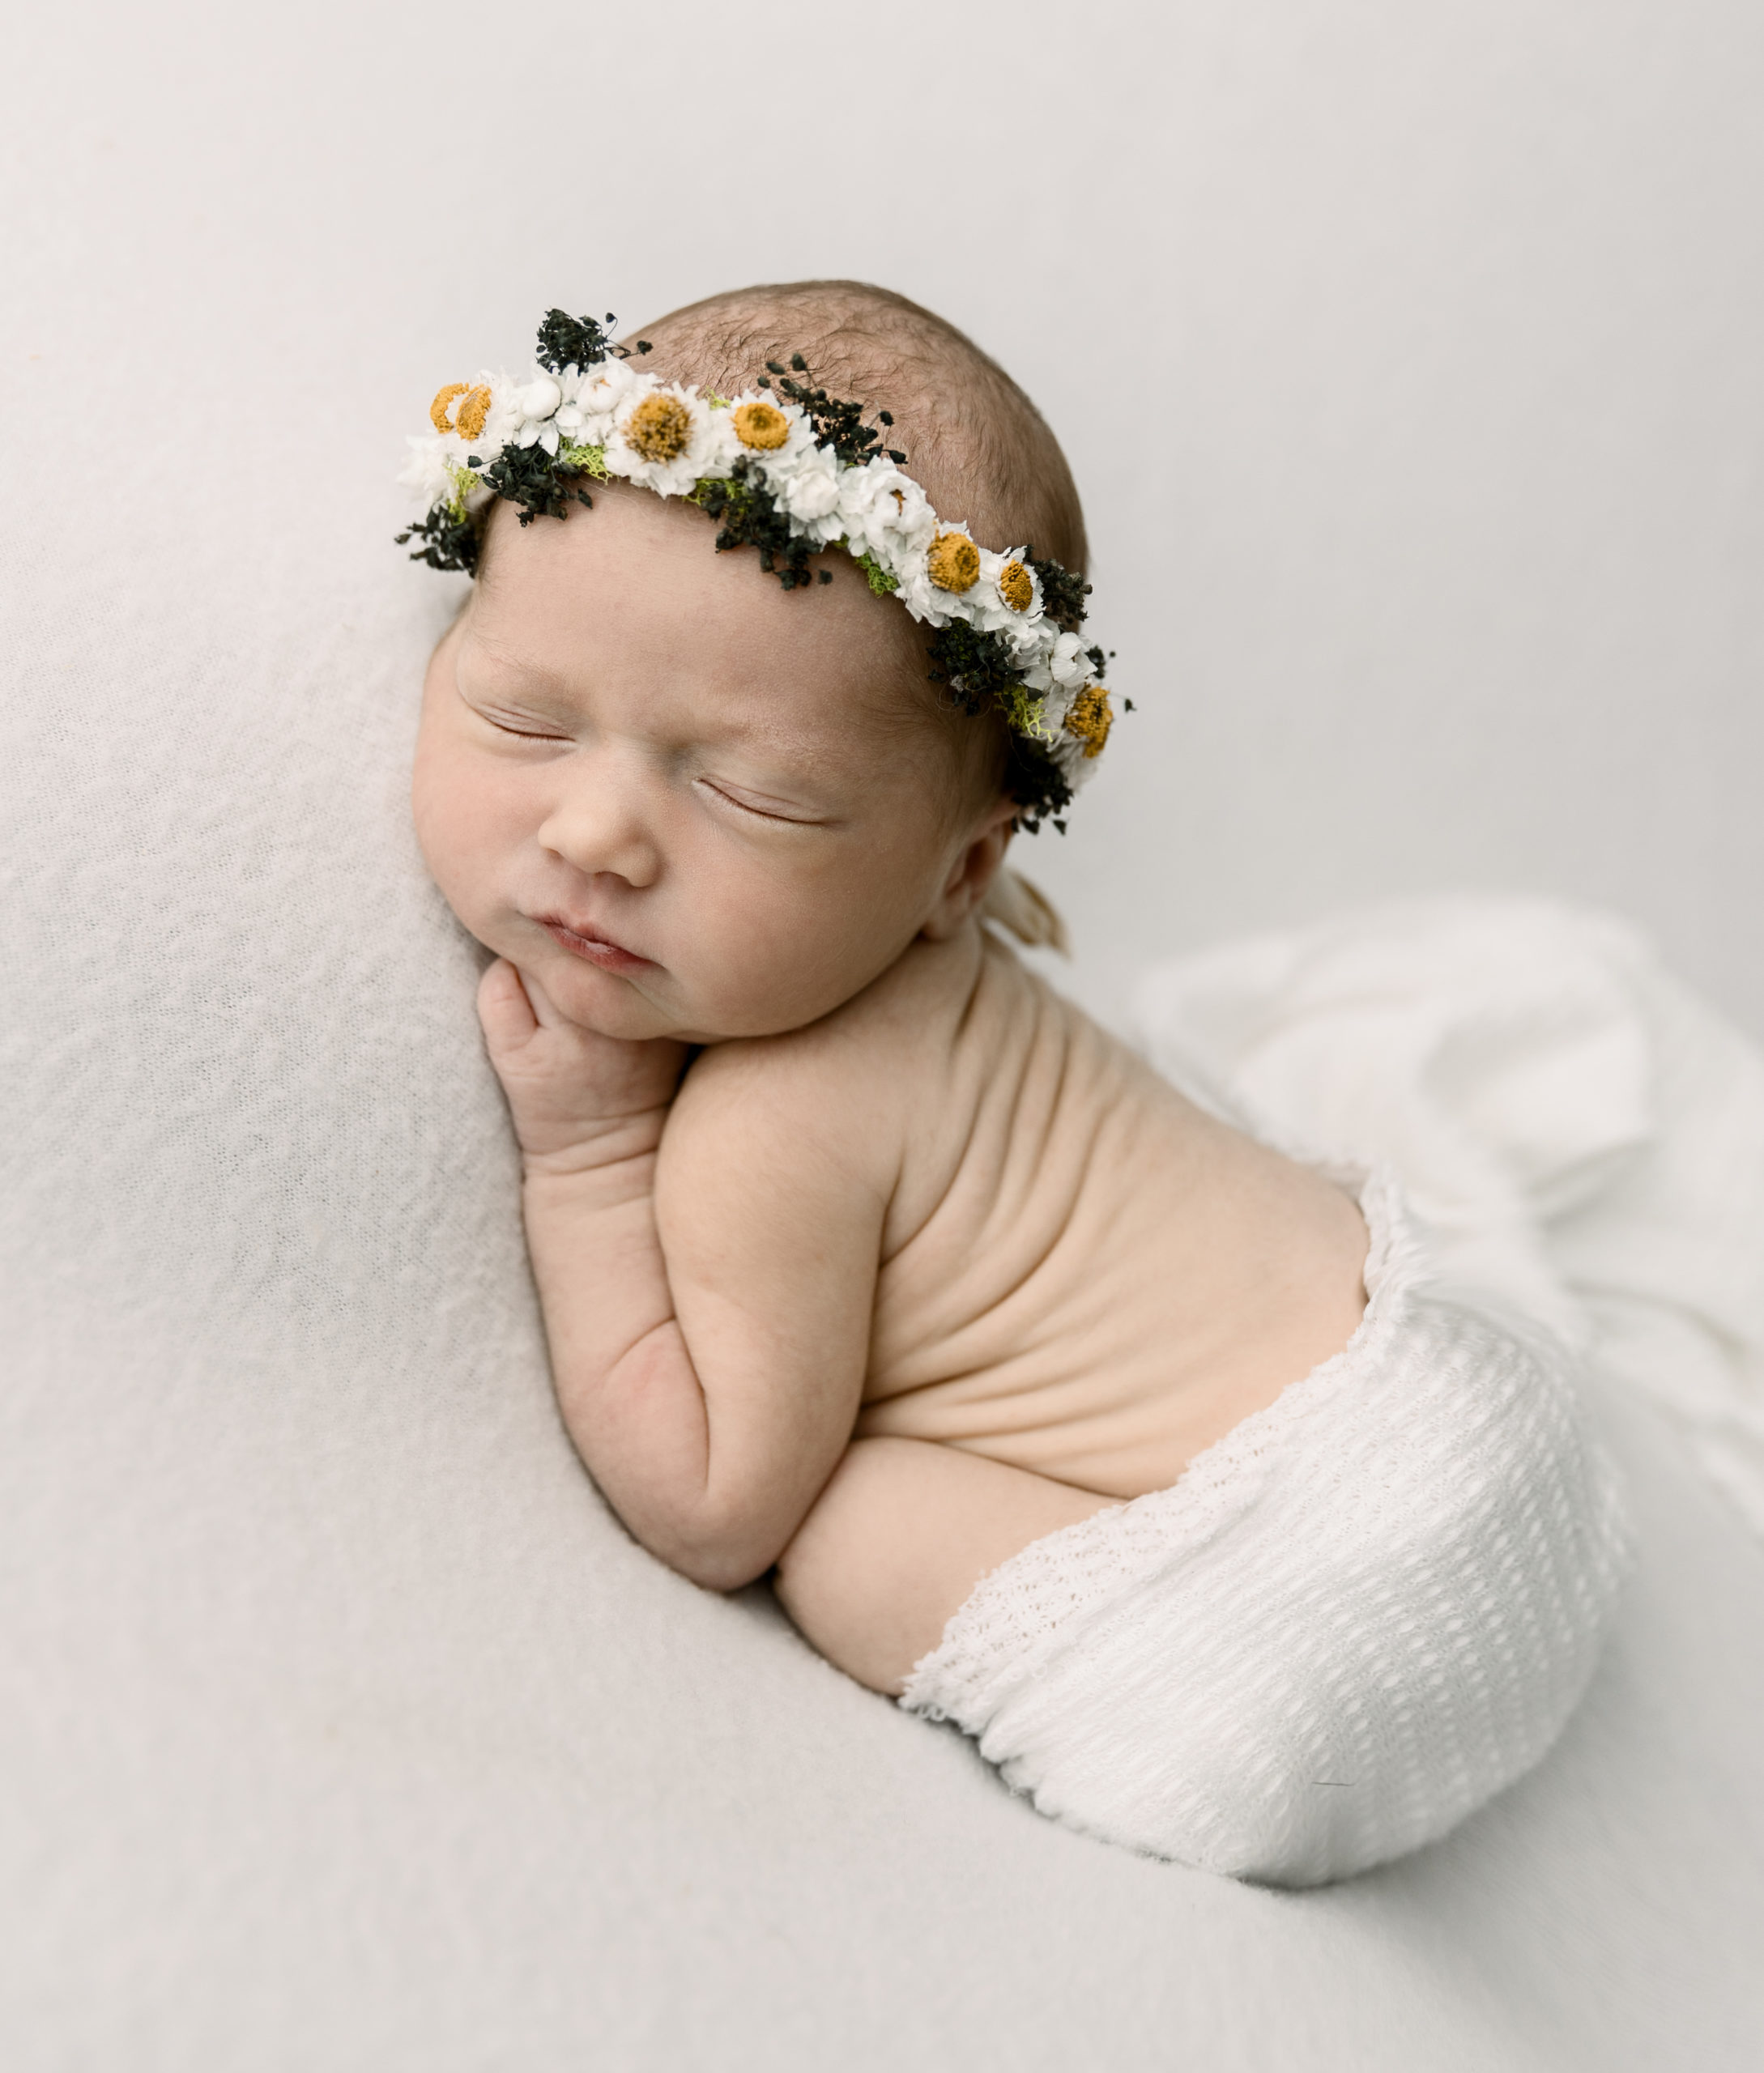 Newborn photo of a baby girl with a beautiful daisy headband